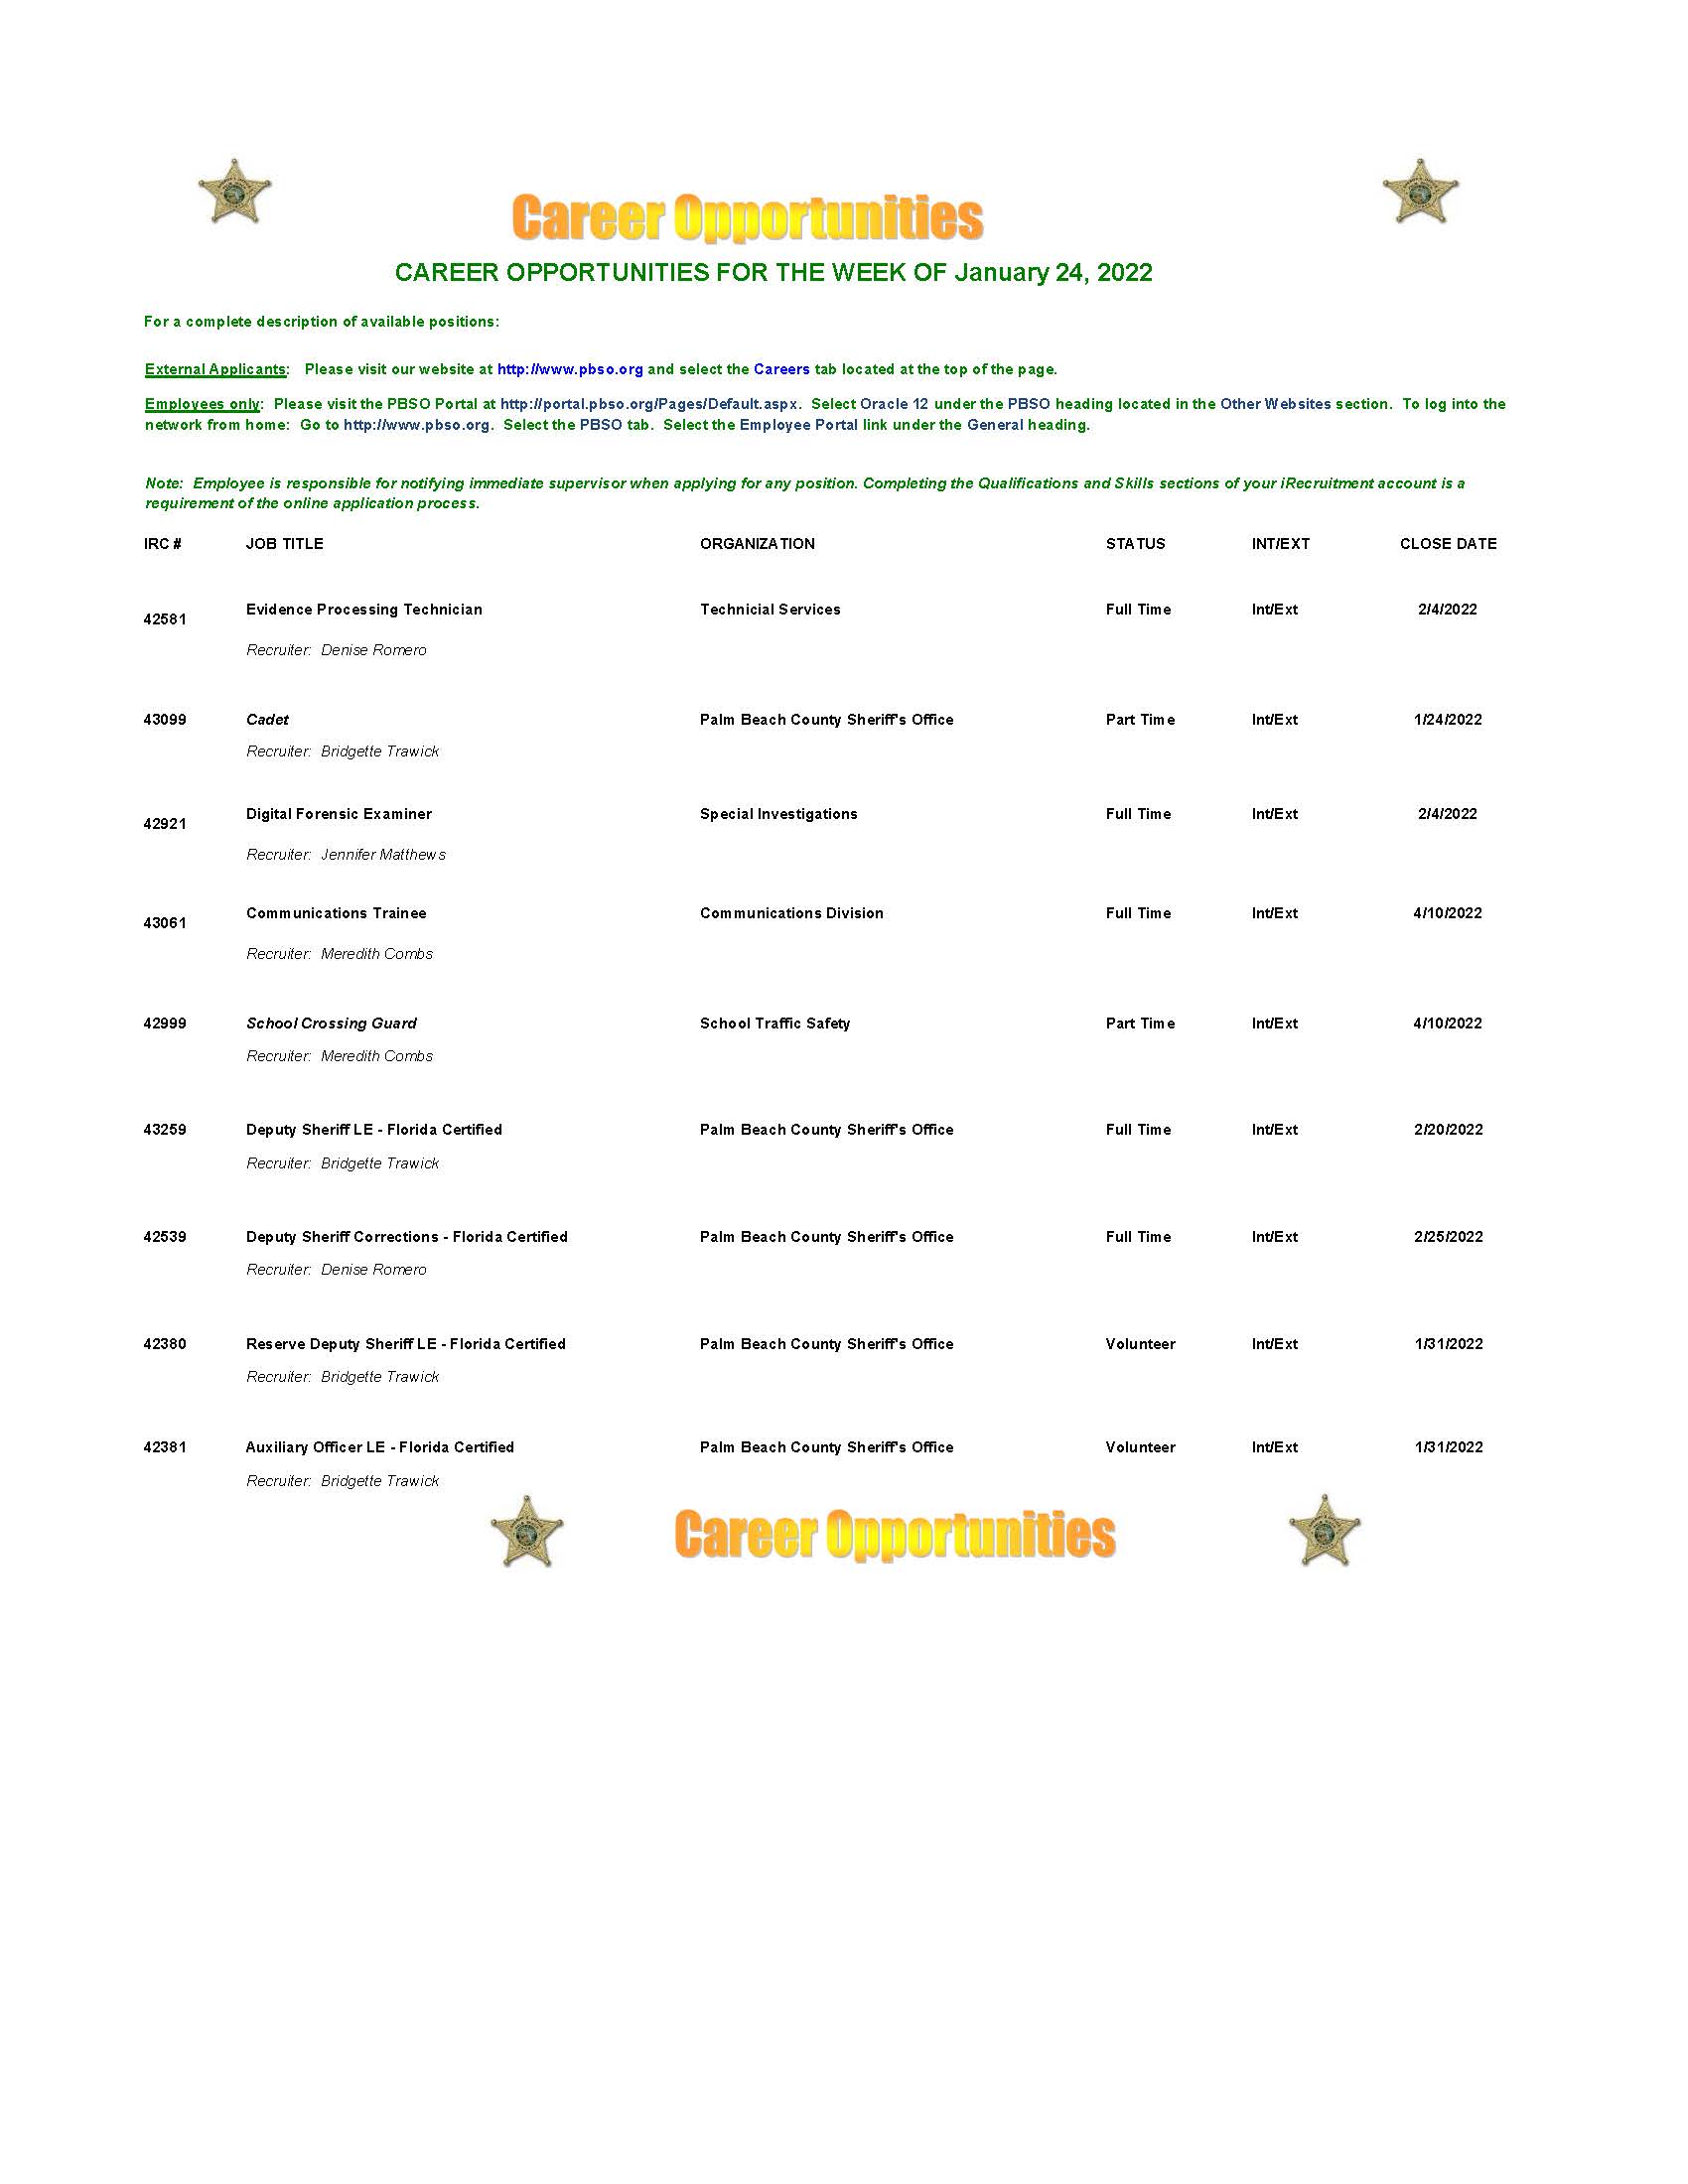 Career Opportunities for week of 1-24-2022